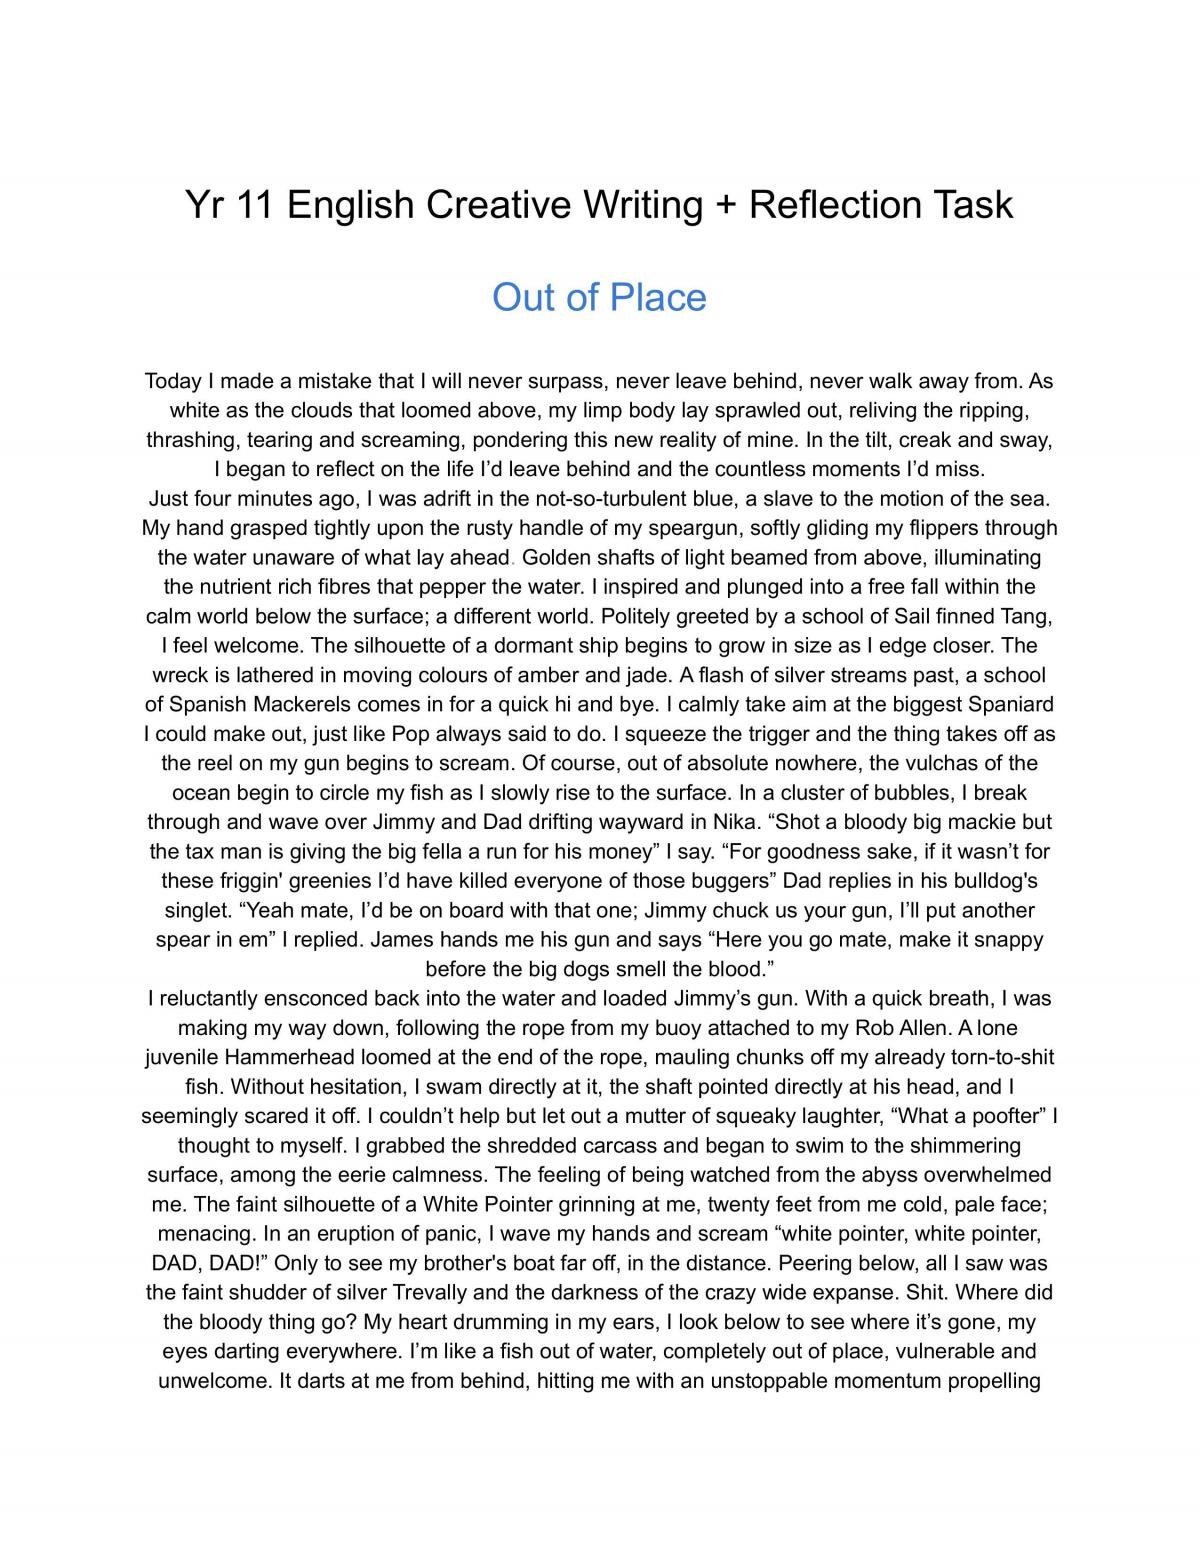 reflection essay creative nonfiction